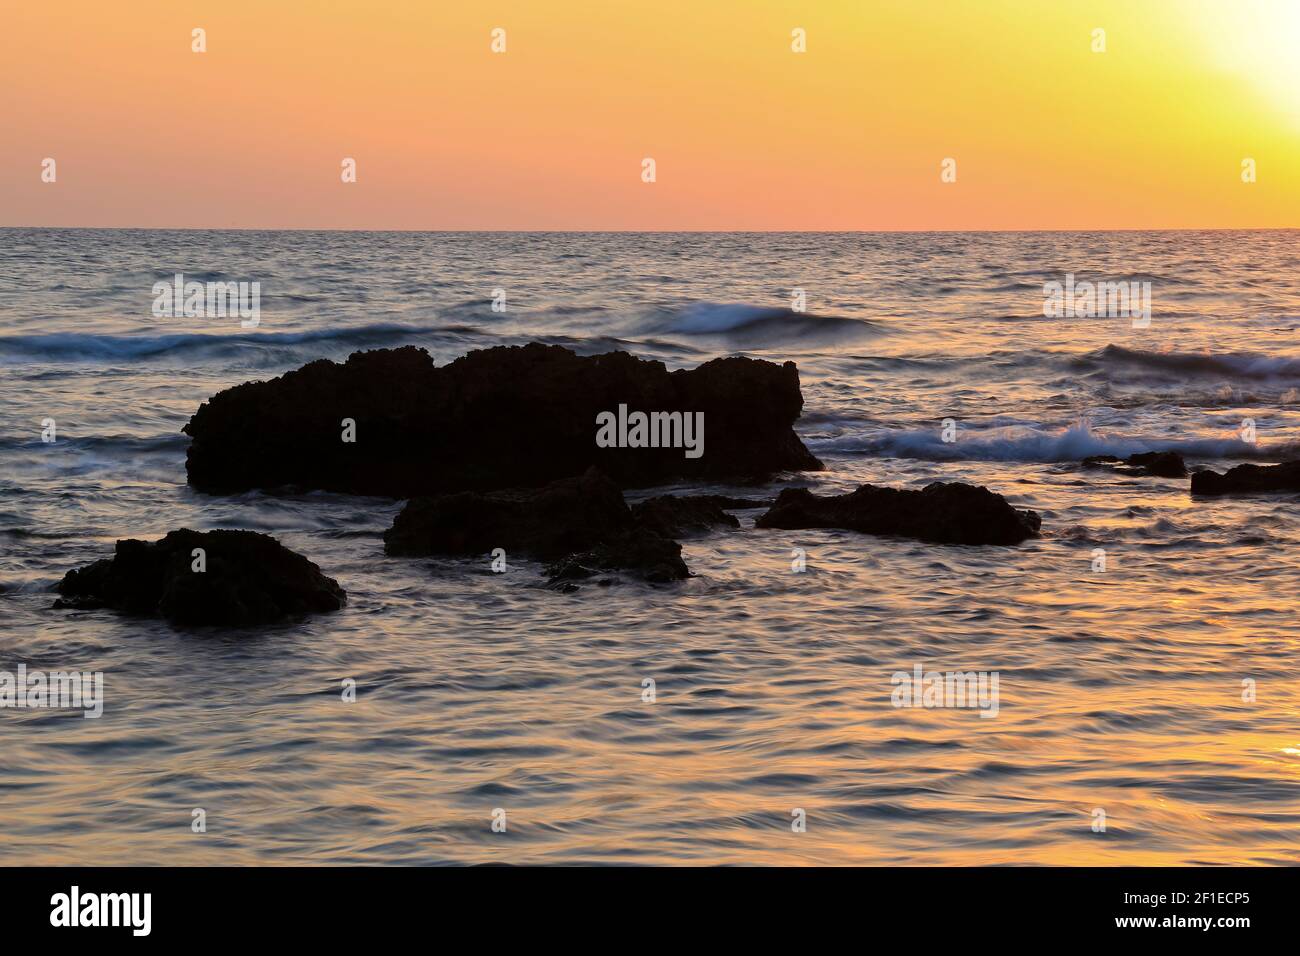 Sun setting over the Mediterranean Sea, Israel Stock Photo